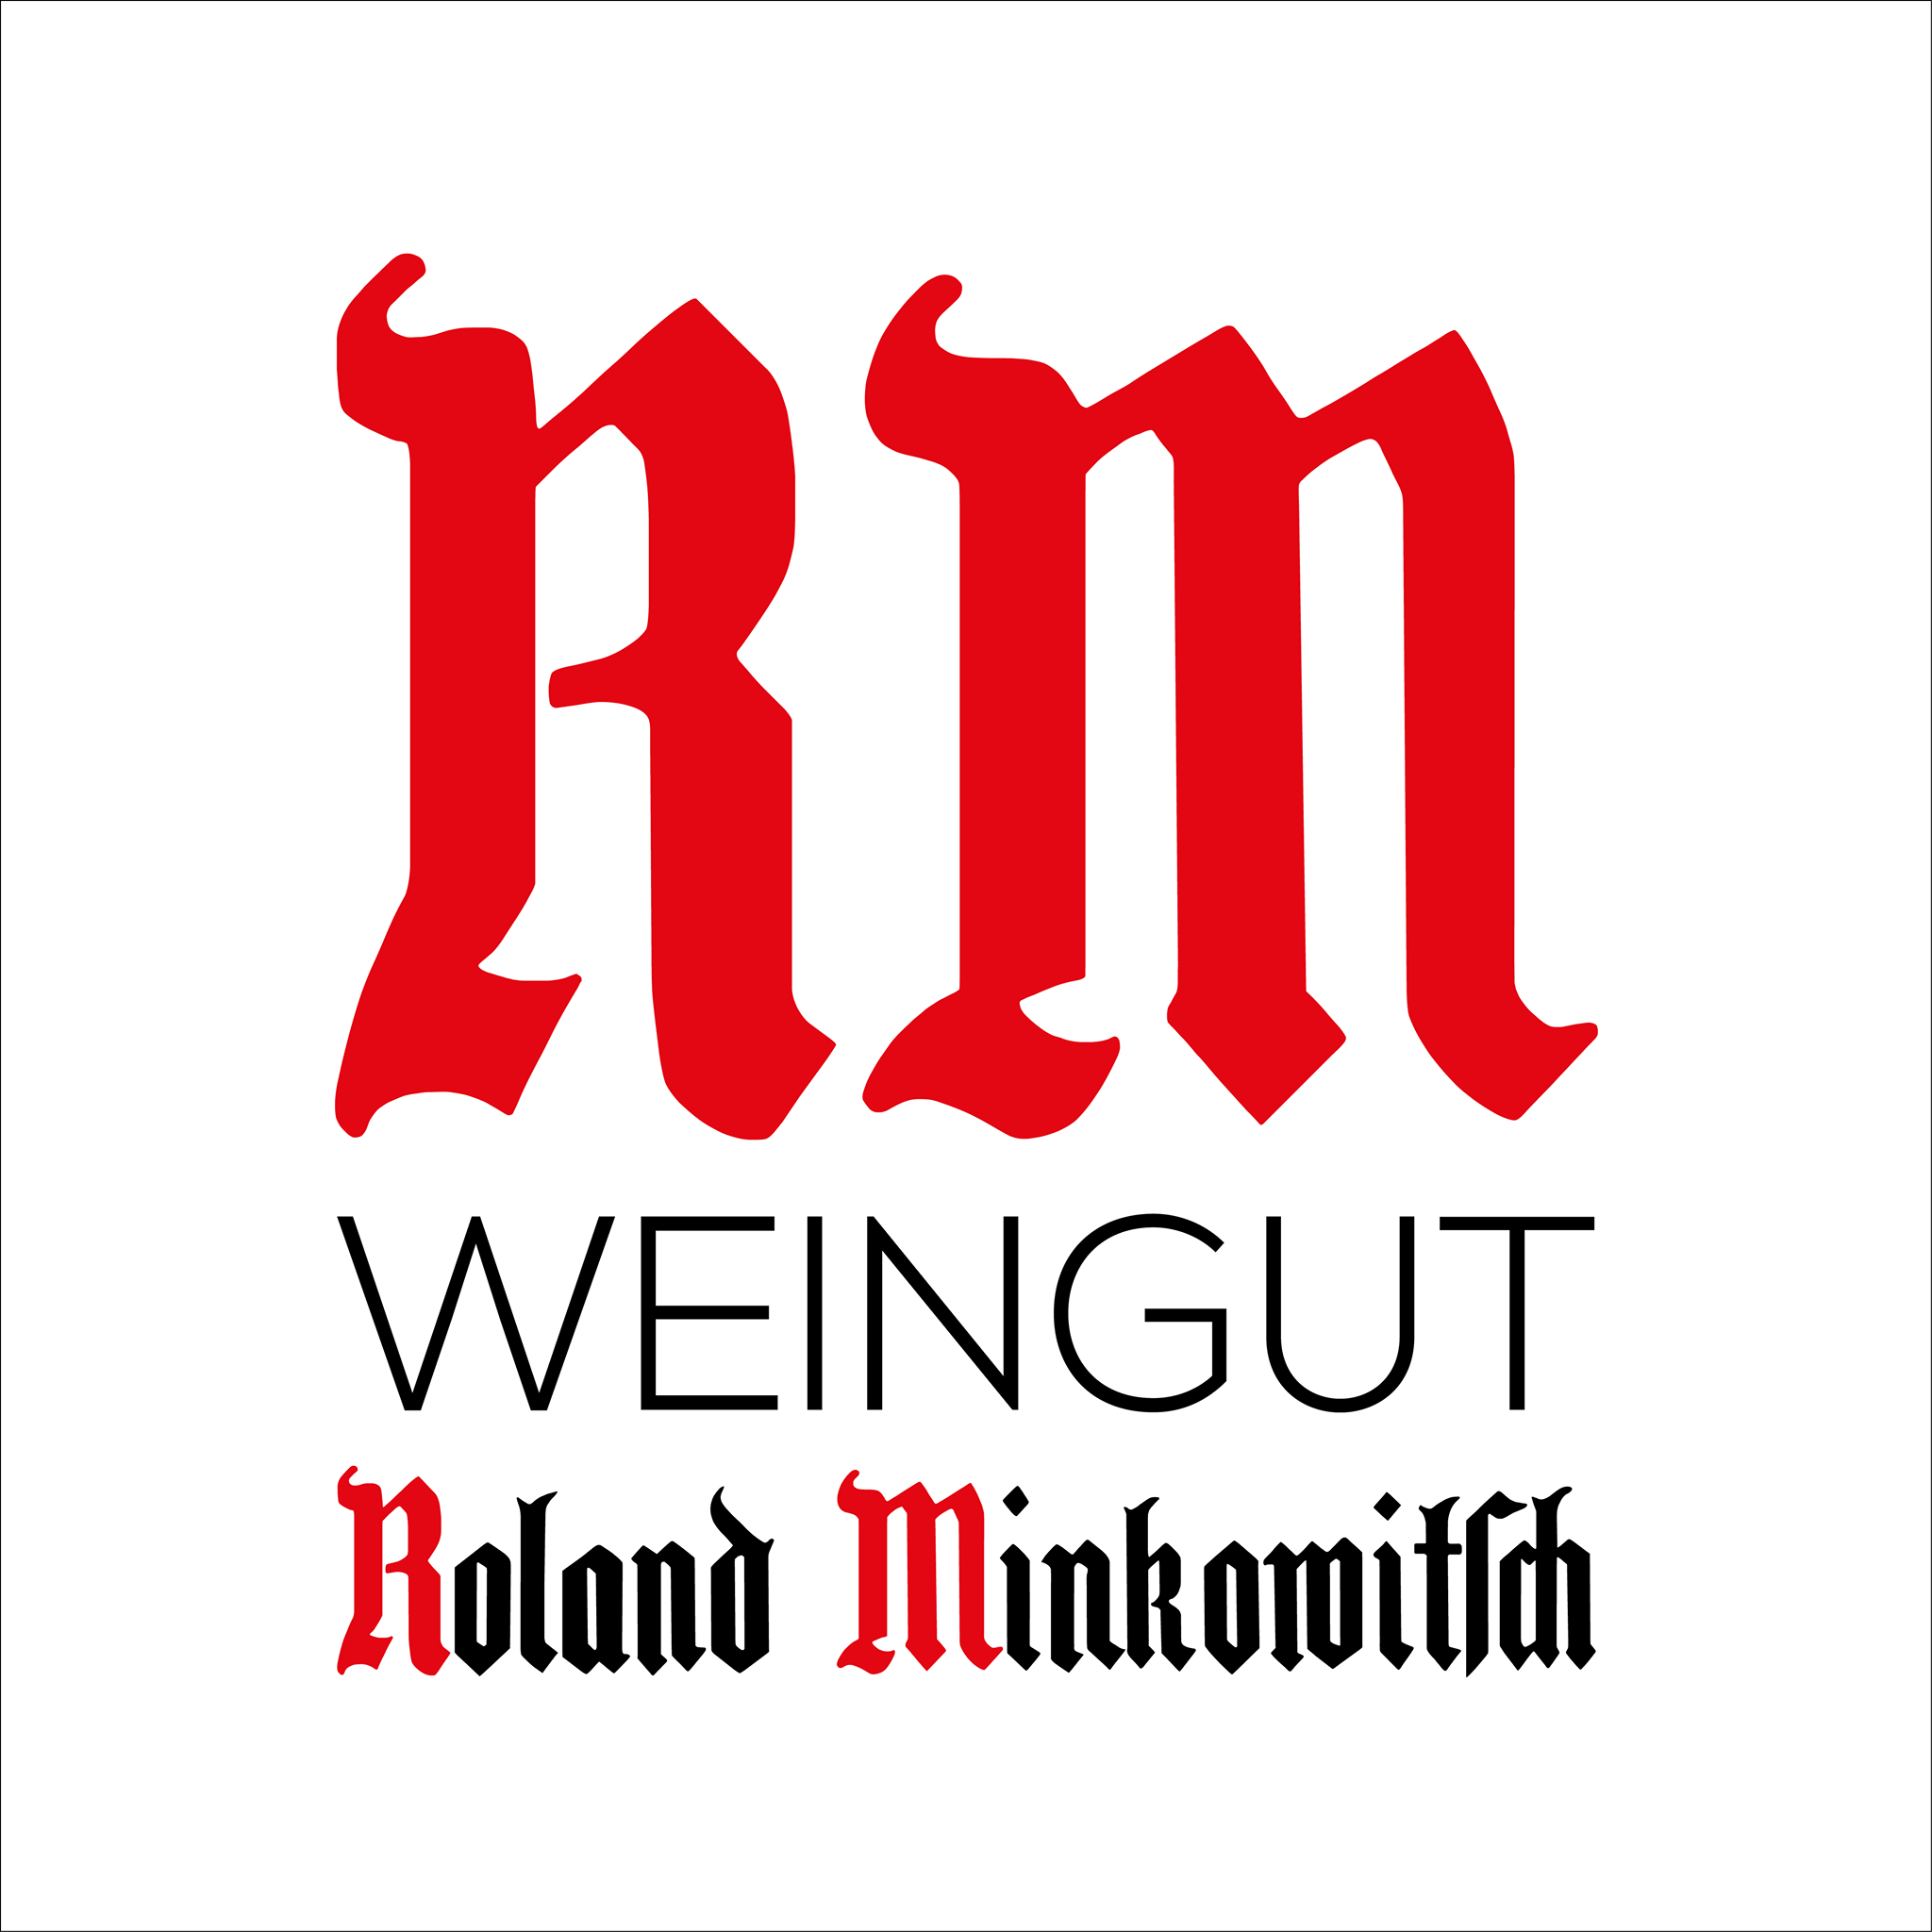 Weingut Roland Minkowitch